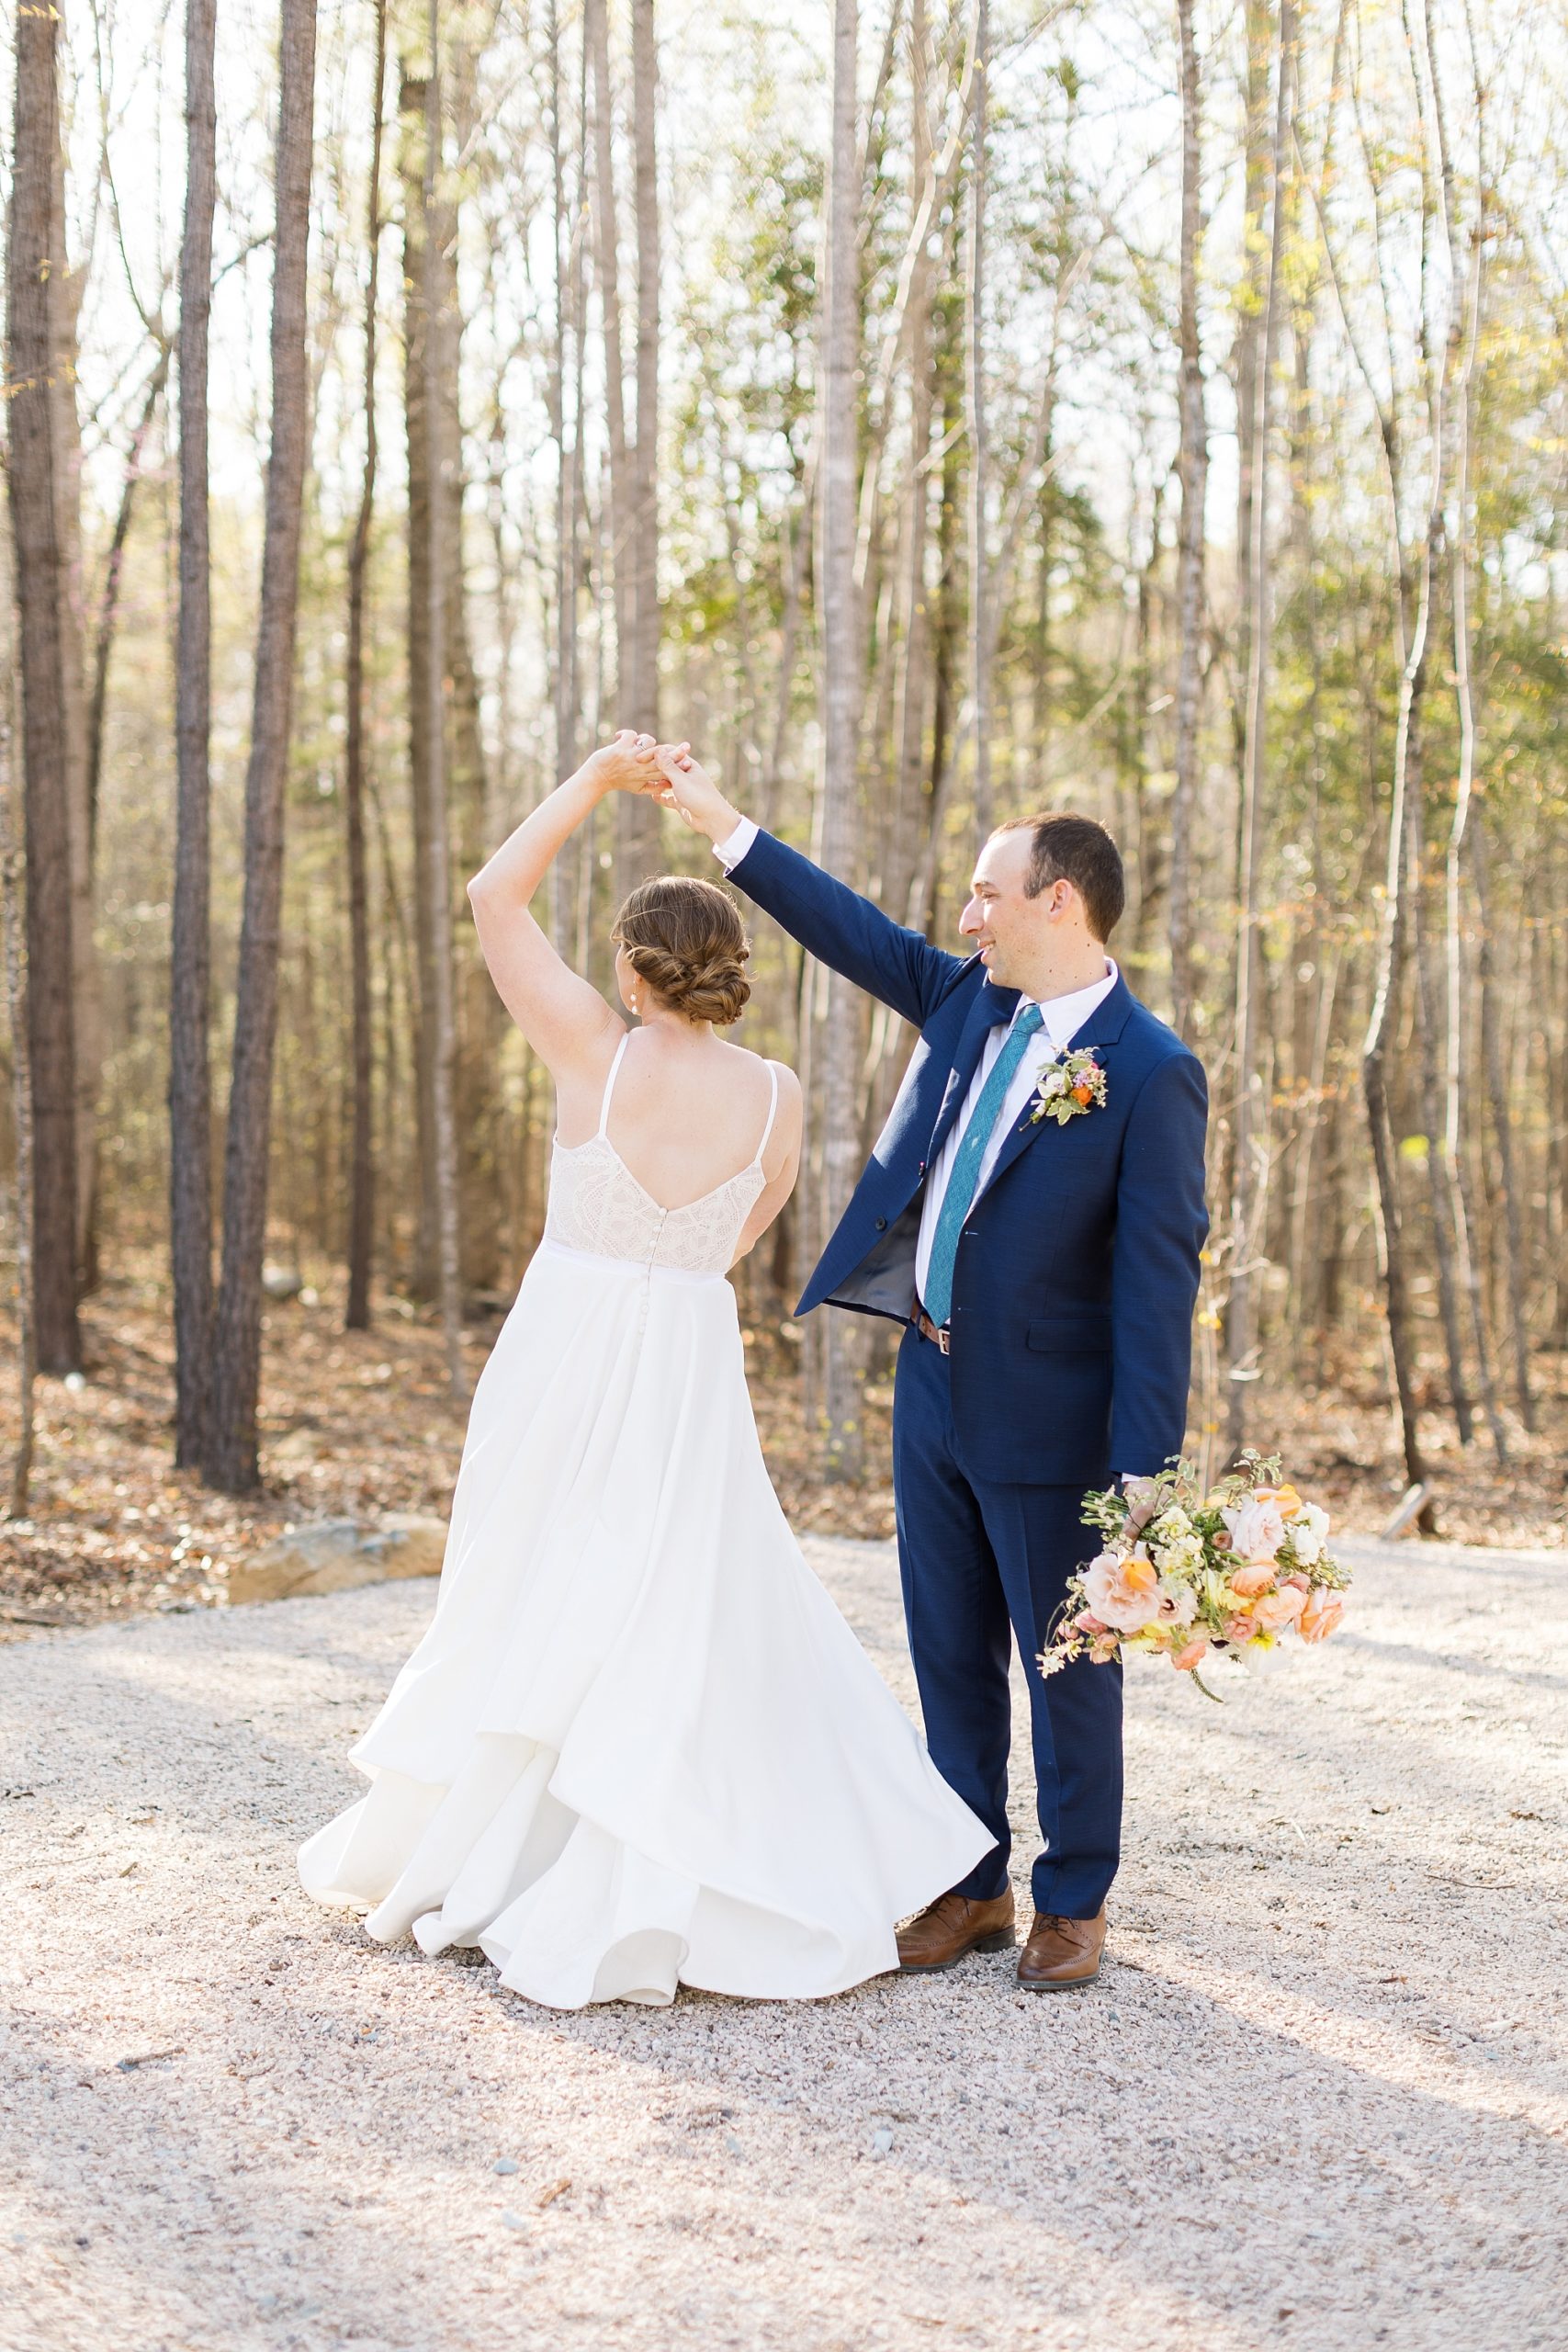 Spring wedding at Carolina Grove in a forest | Raleigh NC Wedding Photographer | Sarah Hinckley Photography